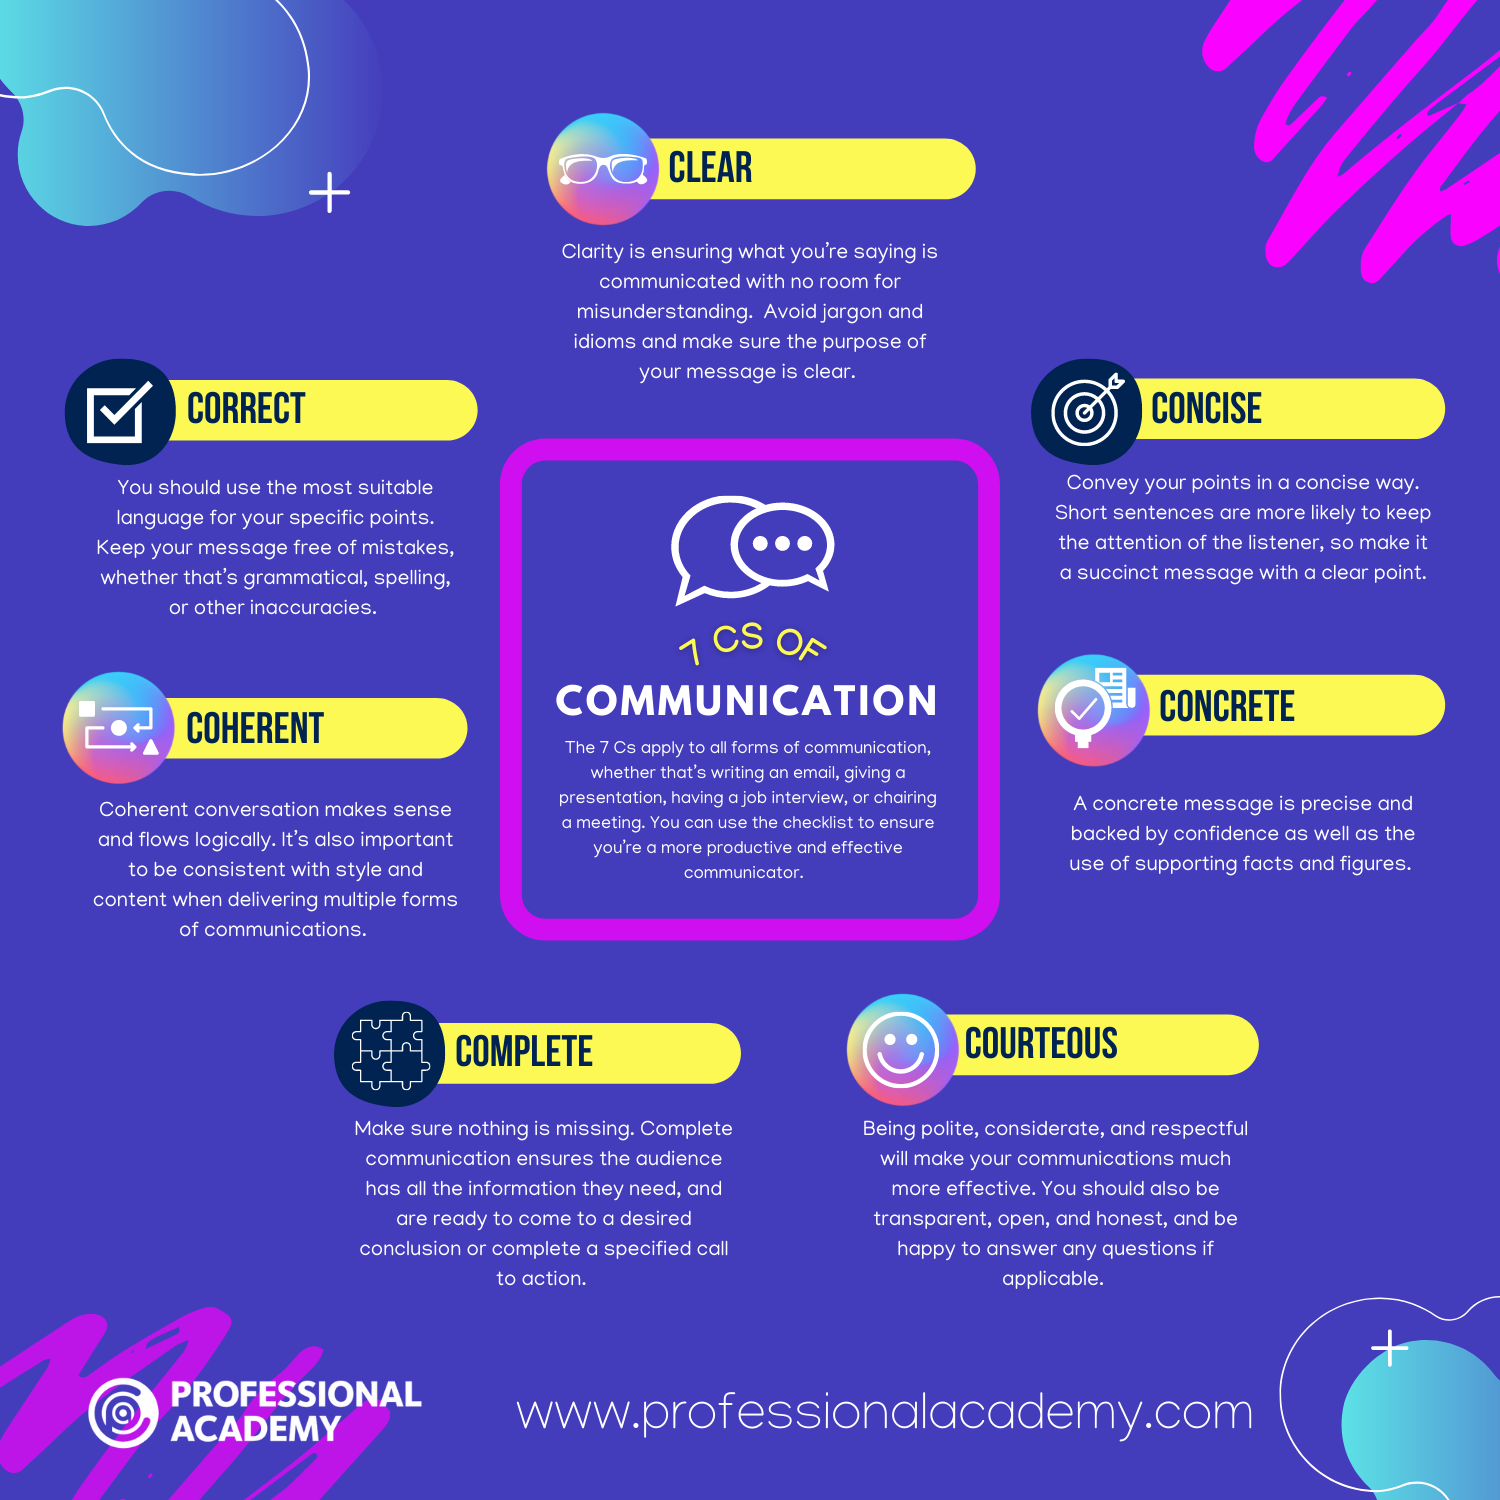 7cs of communication pdf download